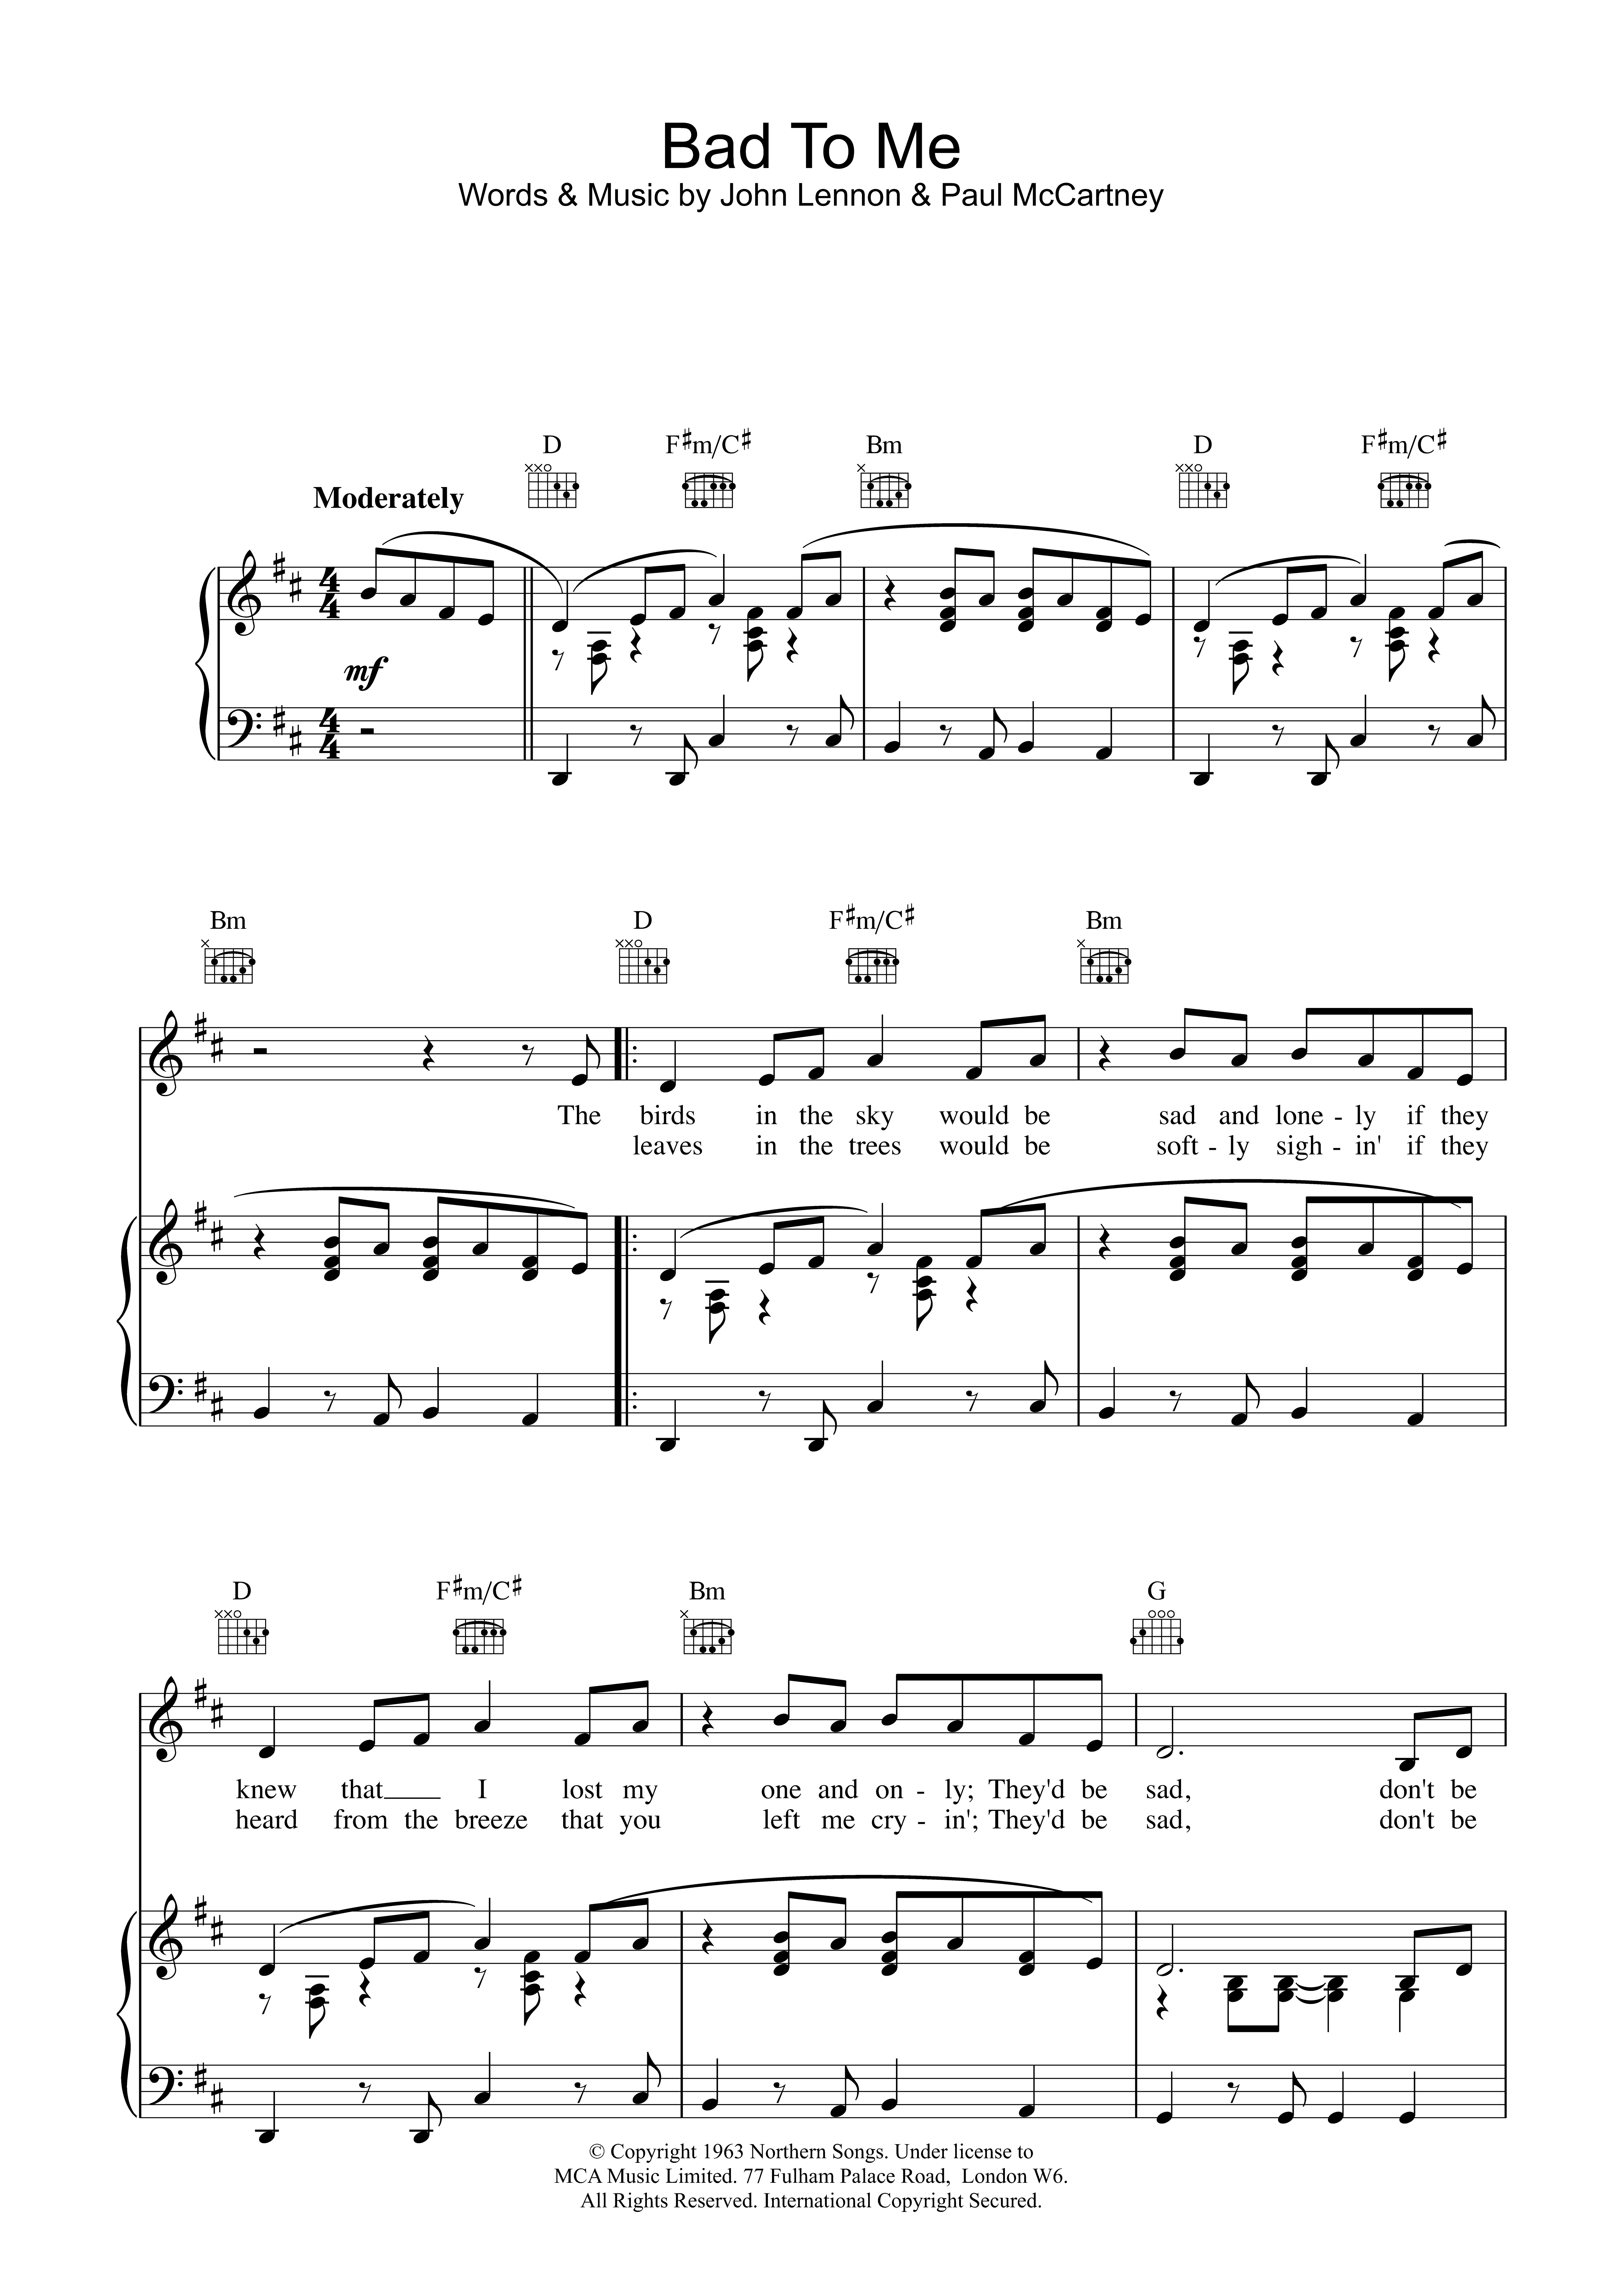 The Beatles Bad To Me sheet music notes printable PDF score